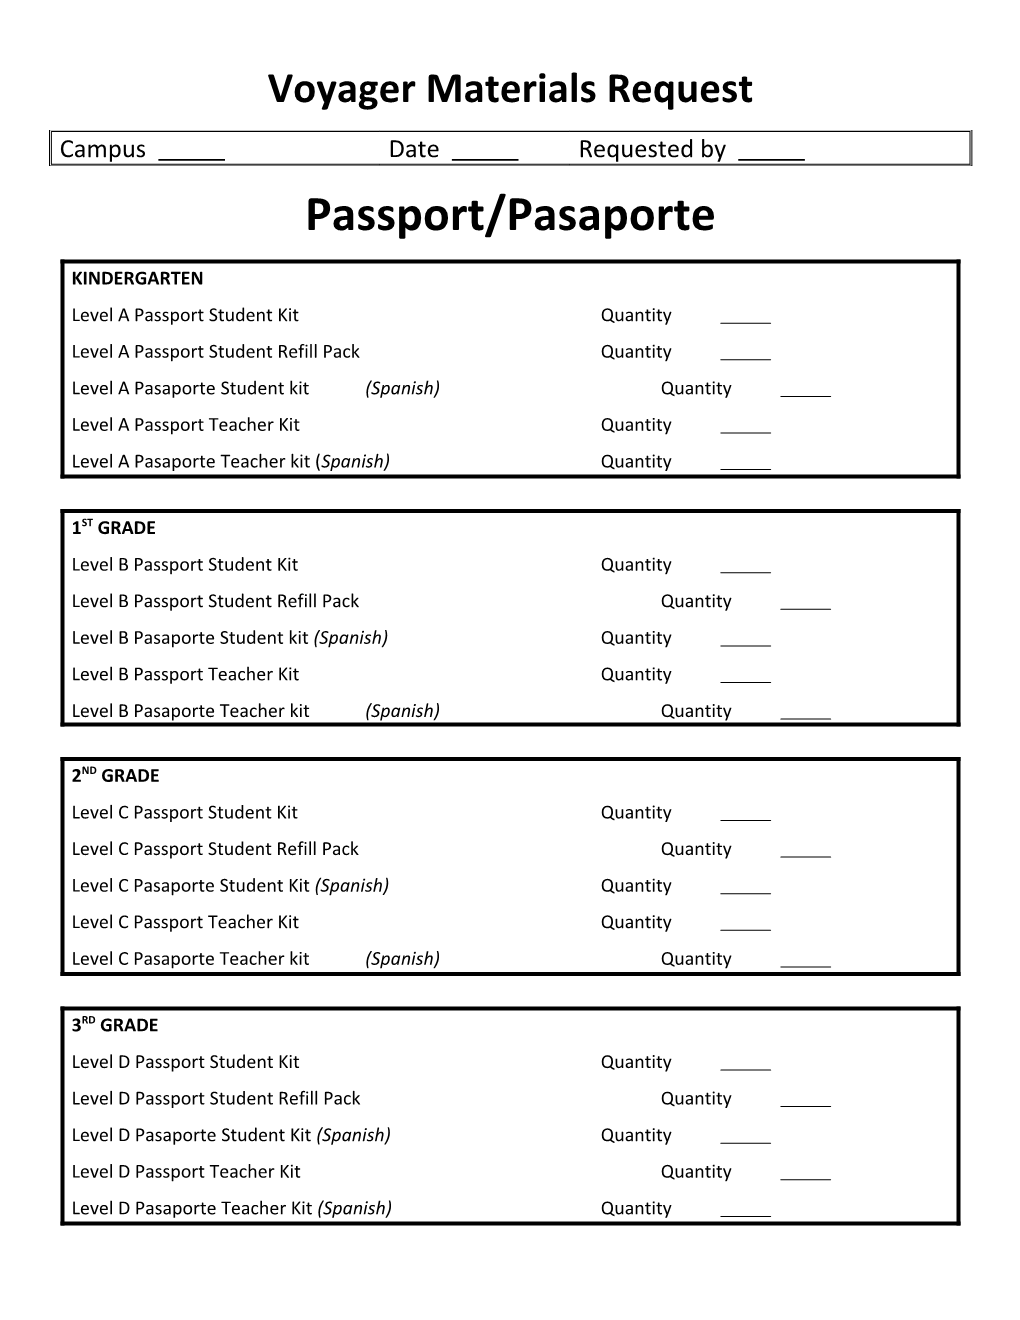 Voyager Passport Reading Materials Request